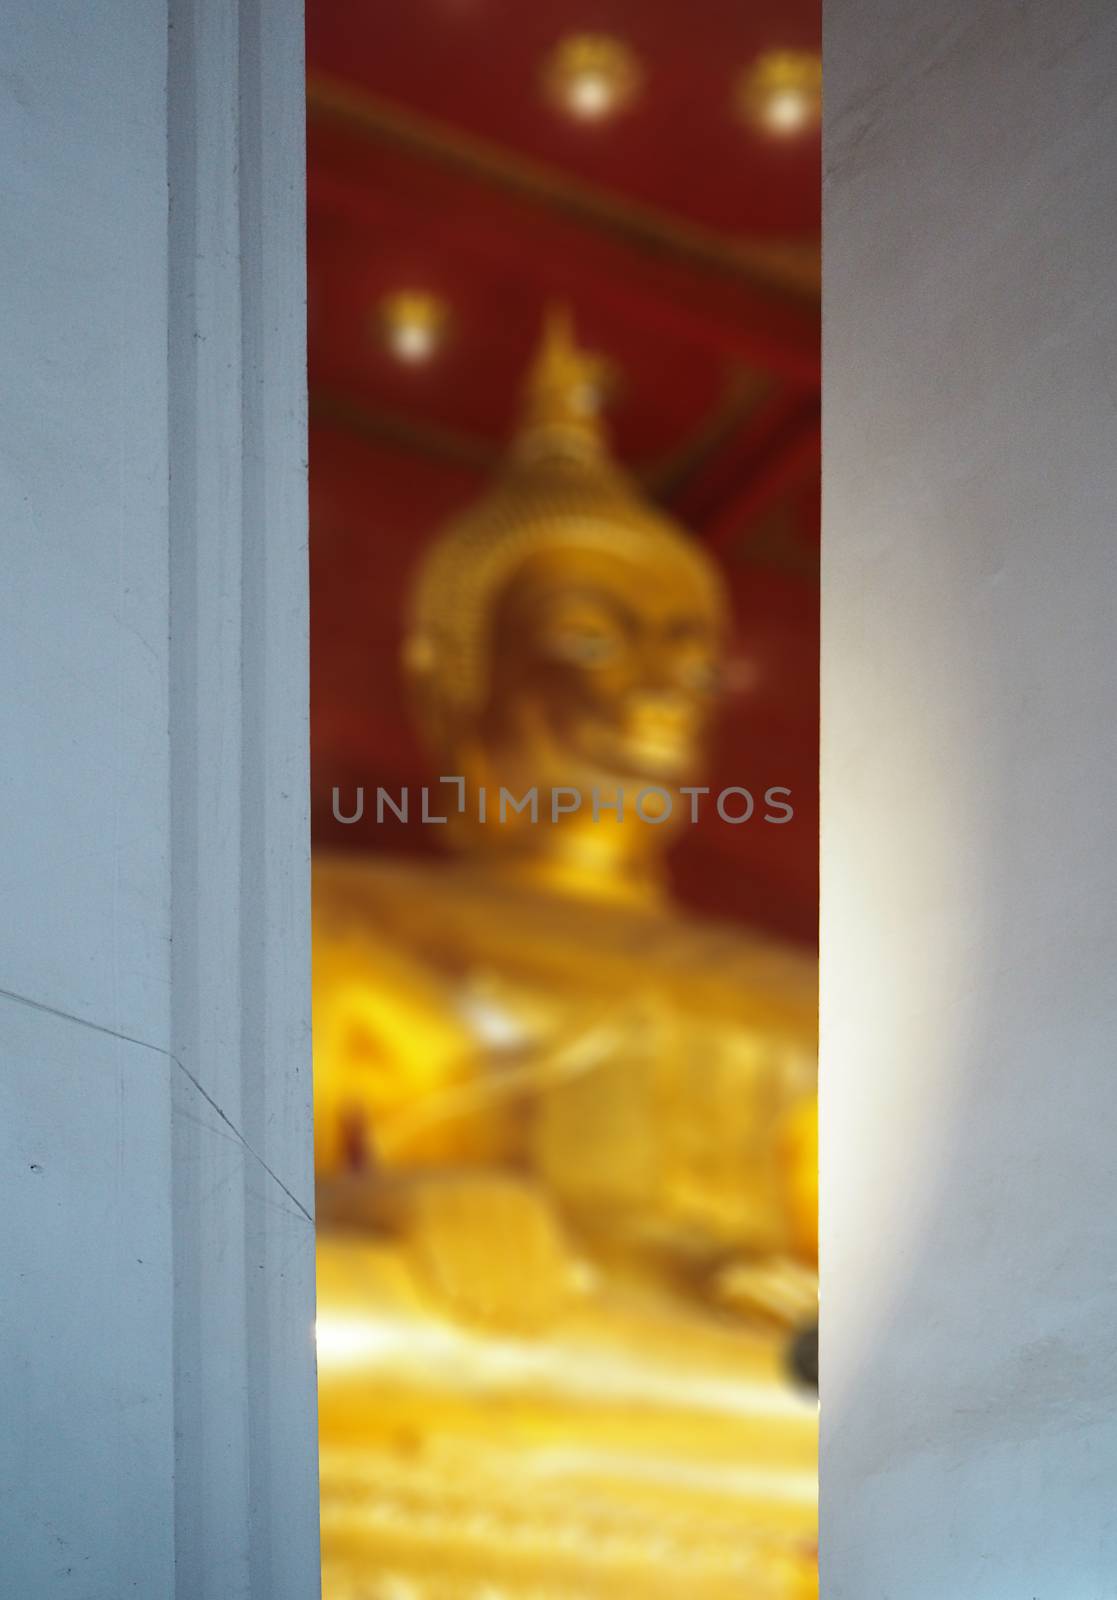 Golden buddha statue. by sky_sirasitwattana